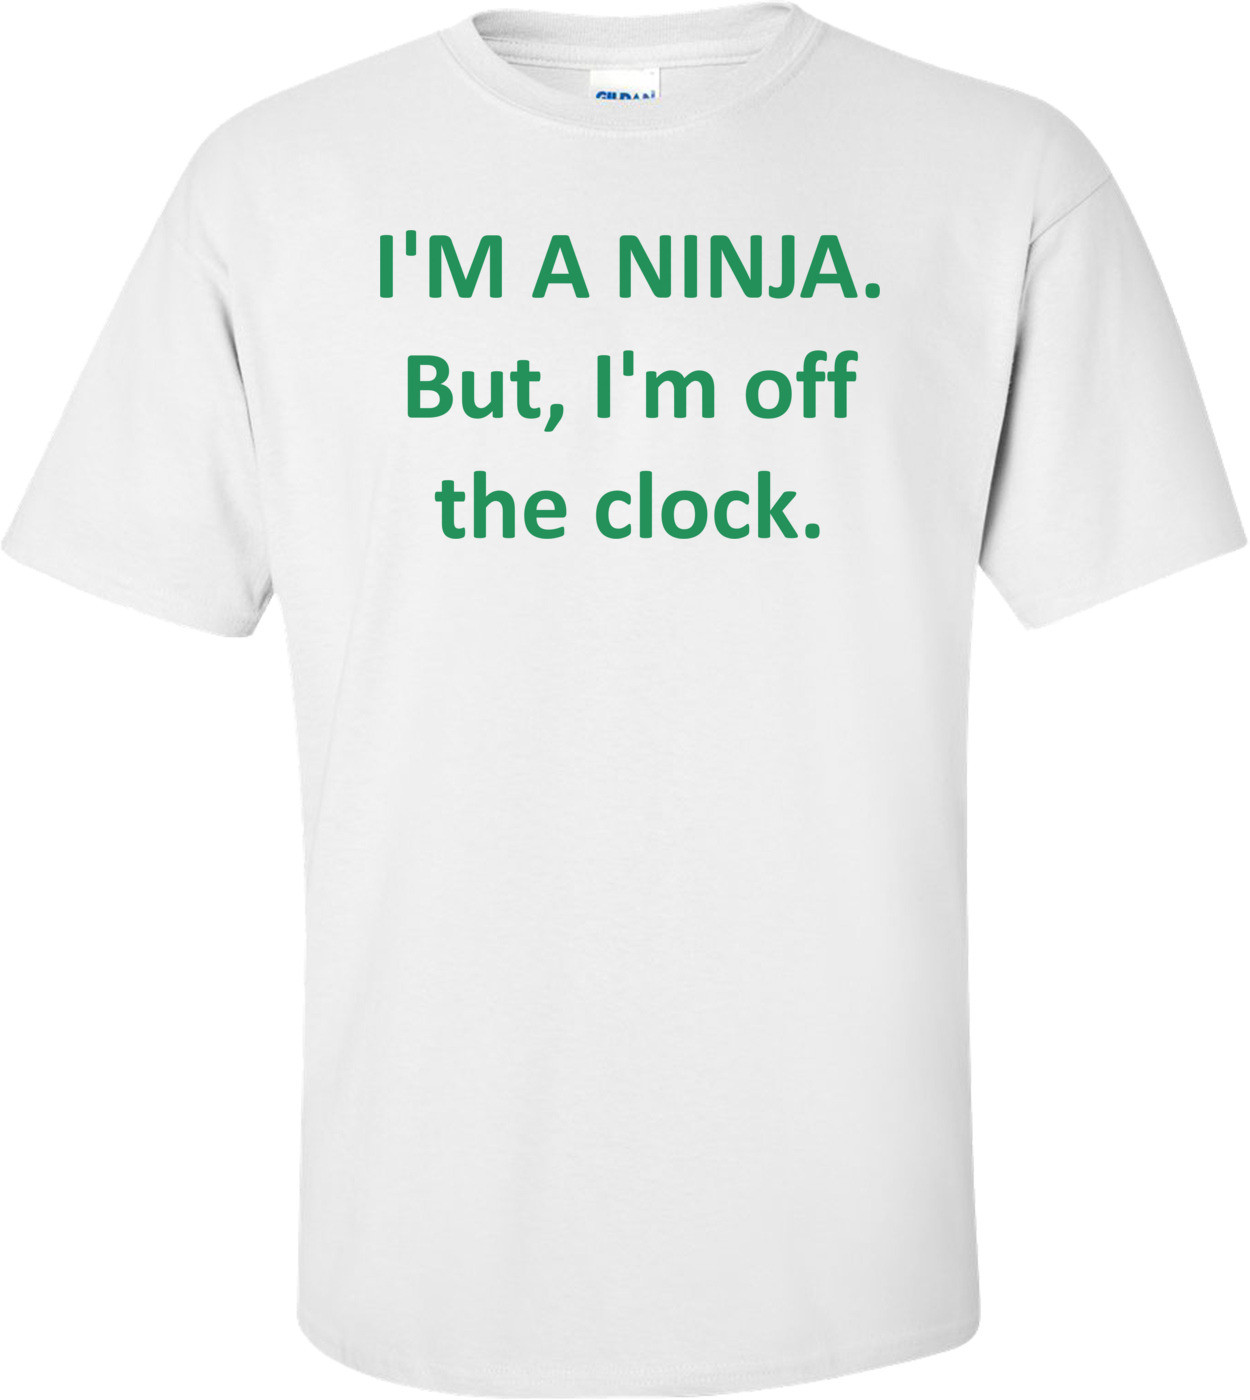 I'M A NINJA. But, I'm off the clock. Shirt